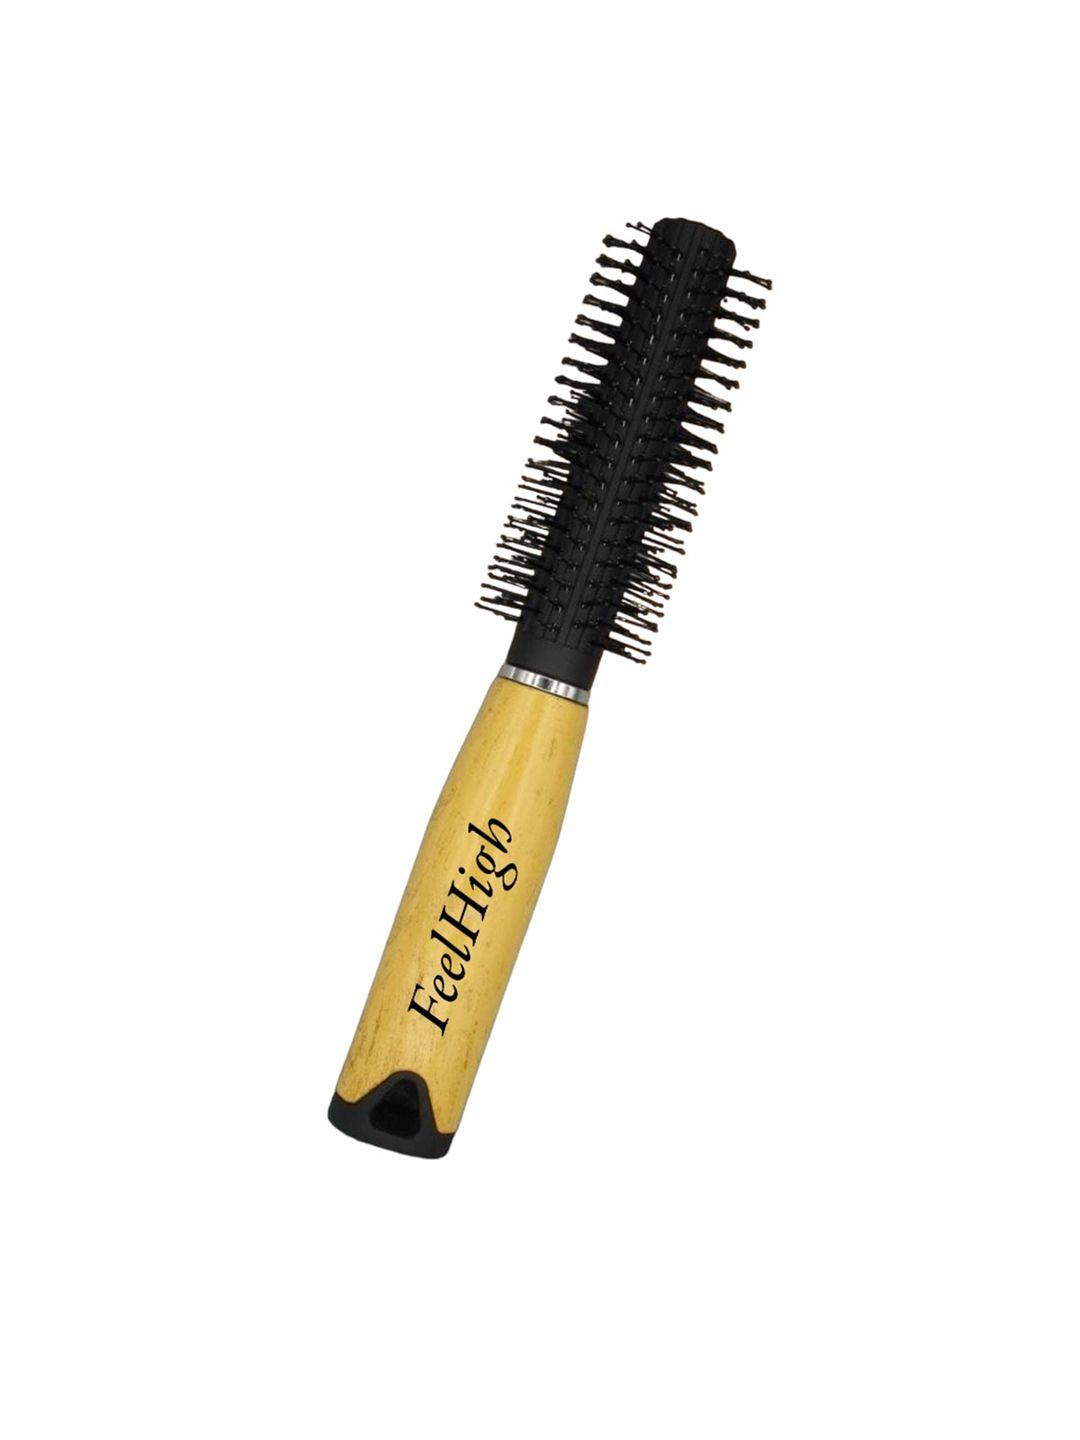 feelhigh professional wooden handle round hair brush